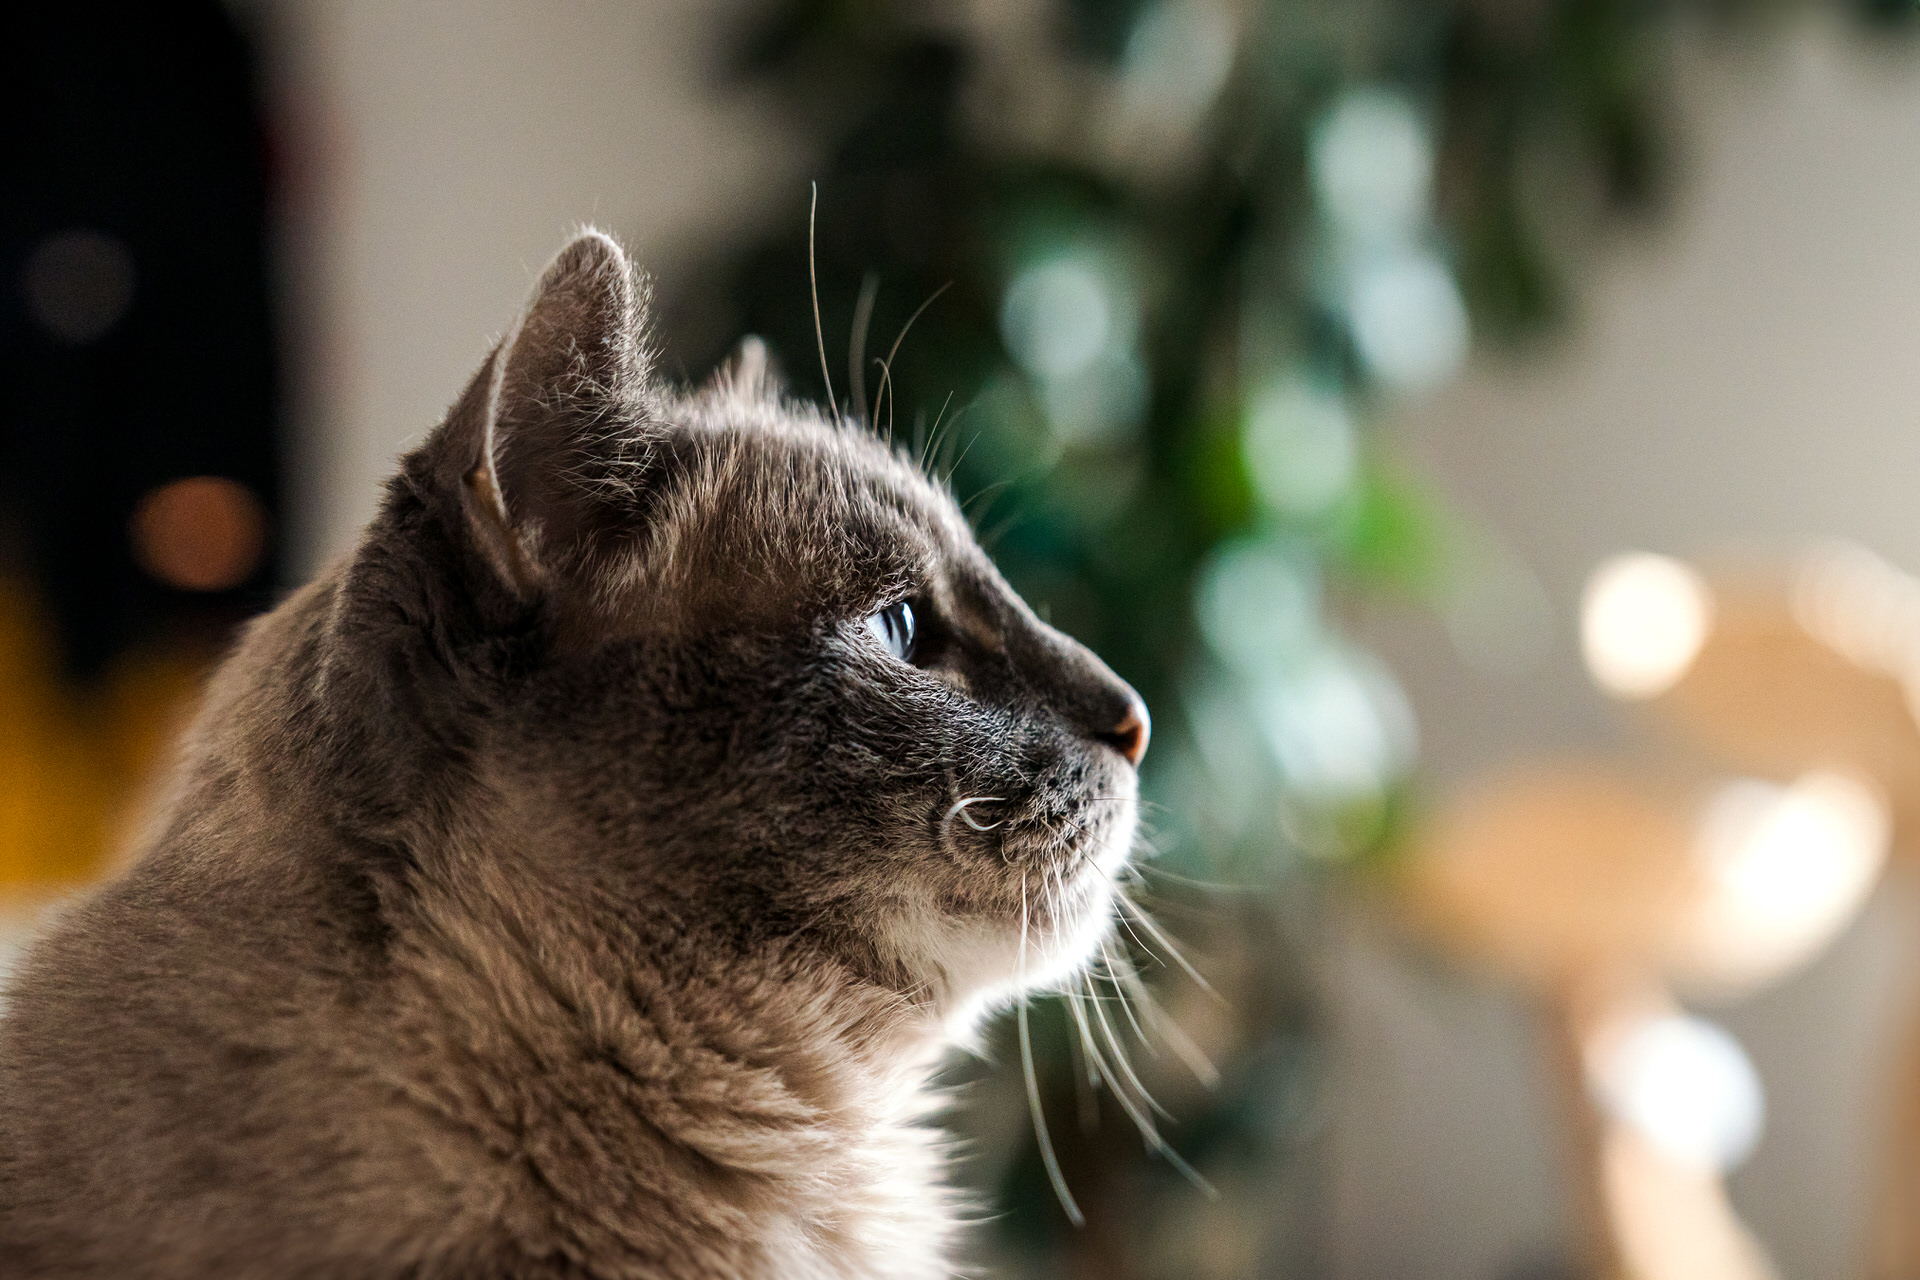 Cat gazing intently indoors.